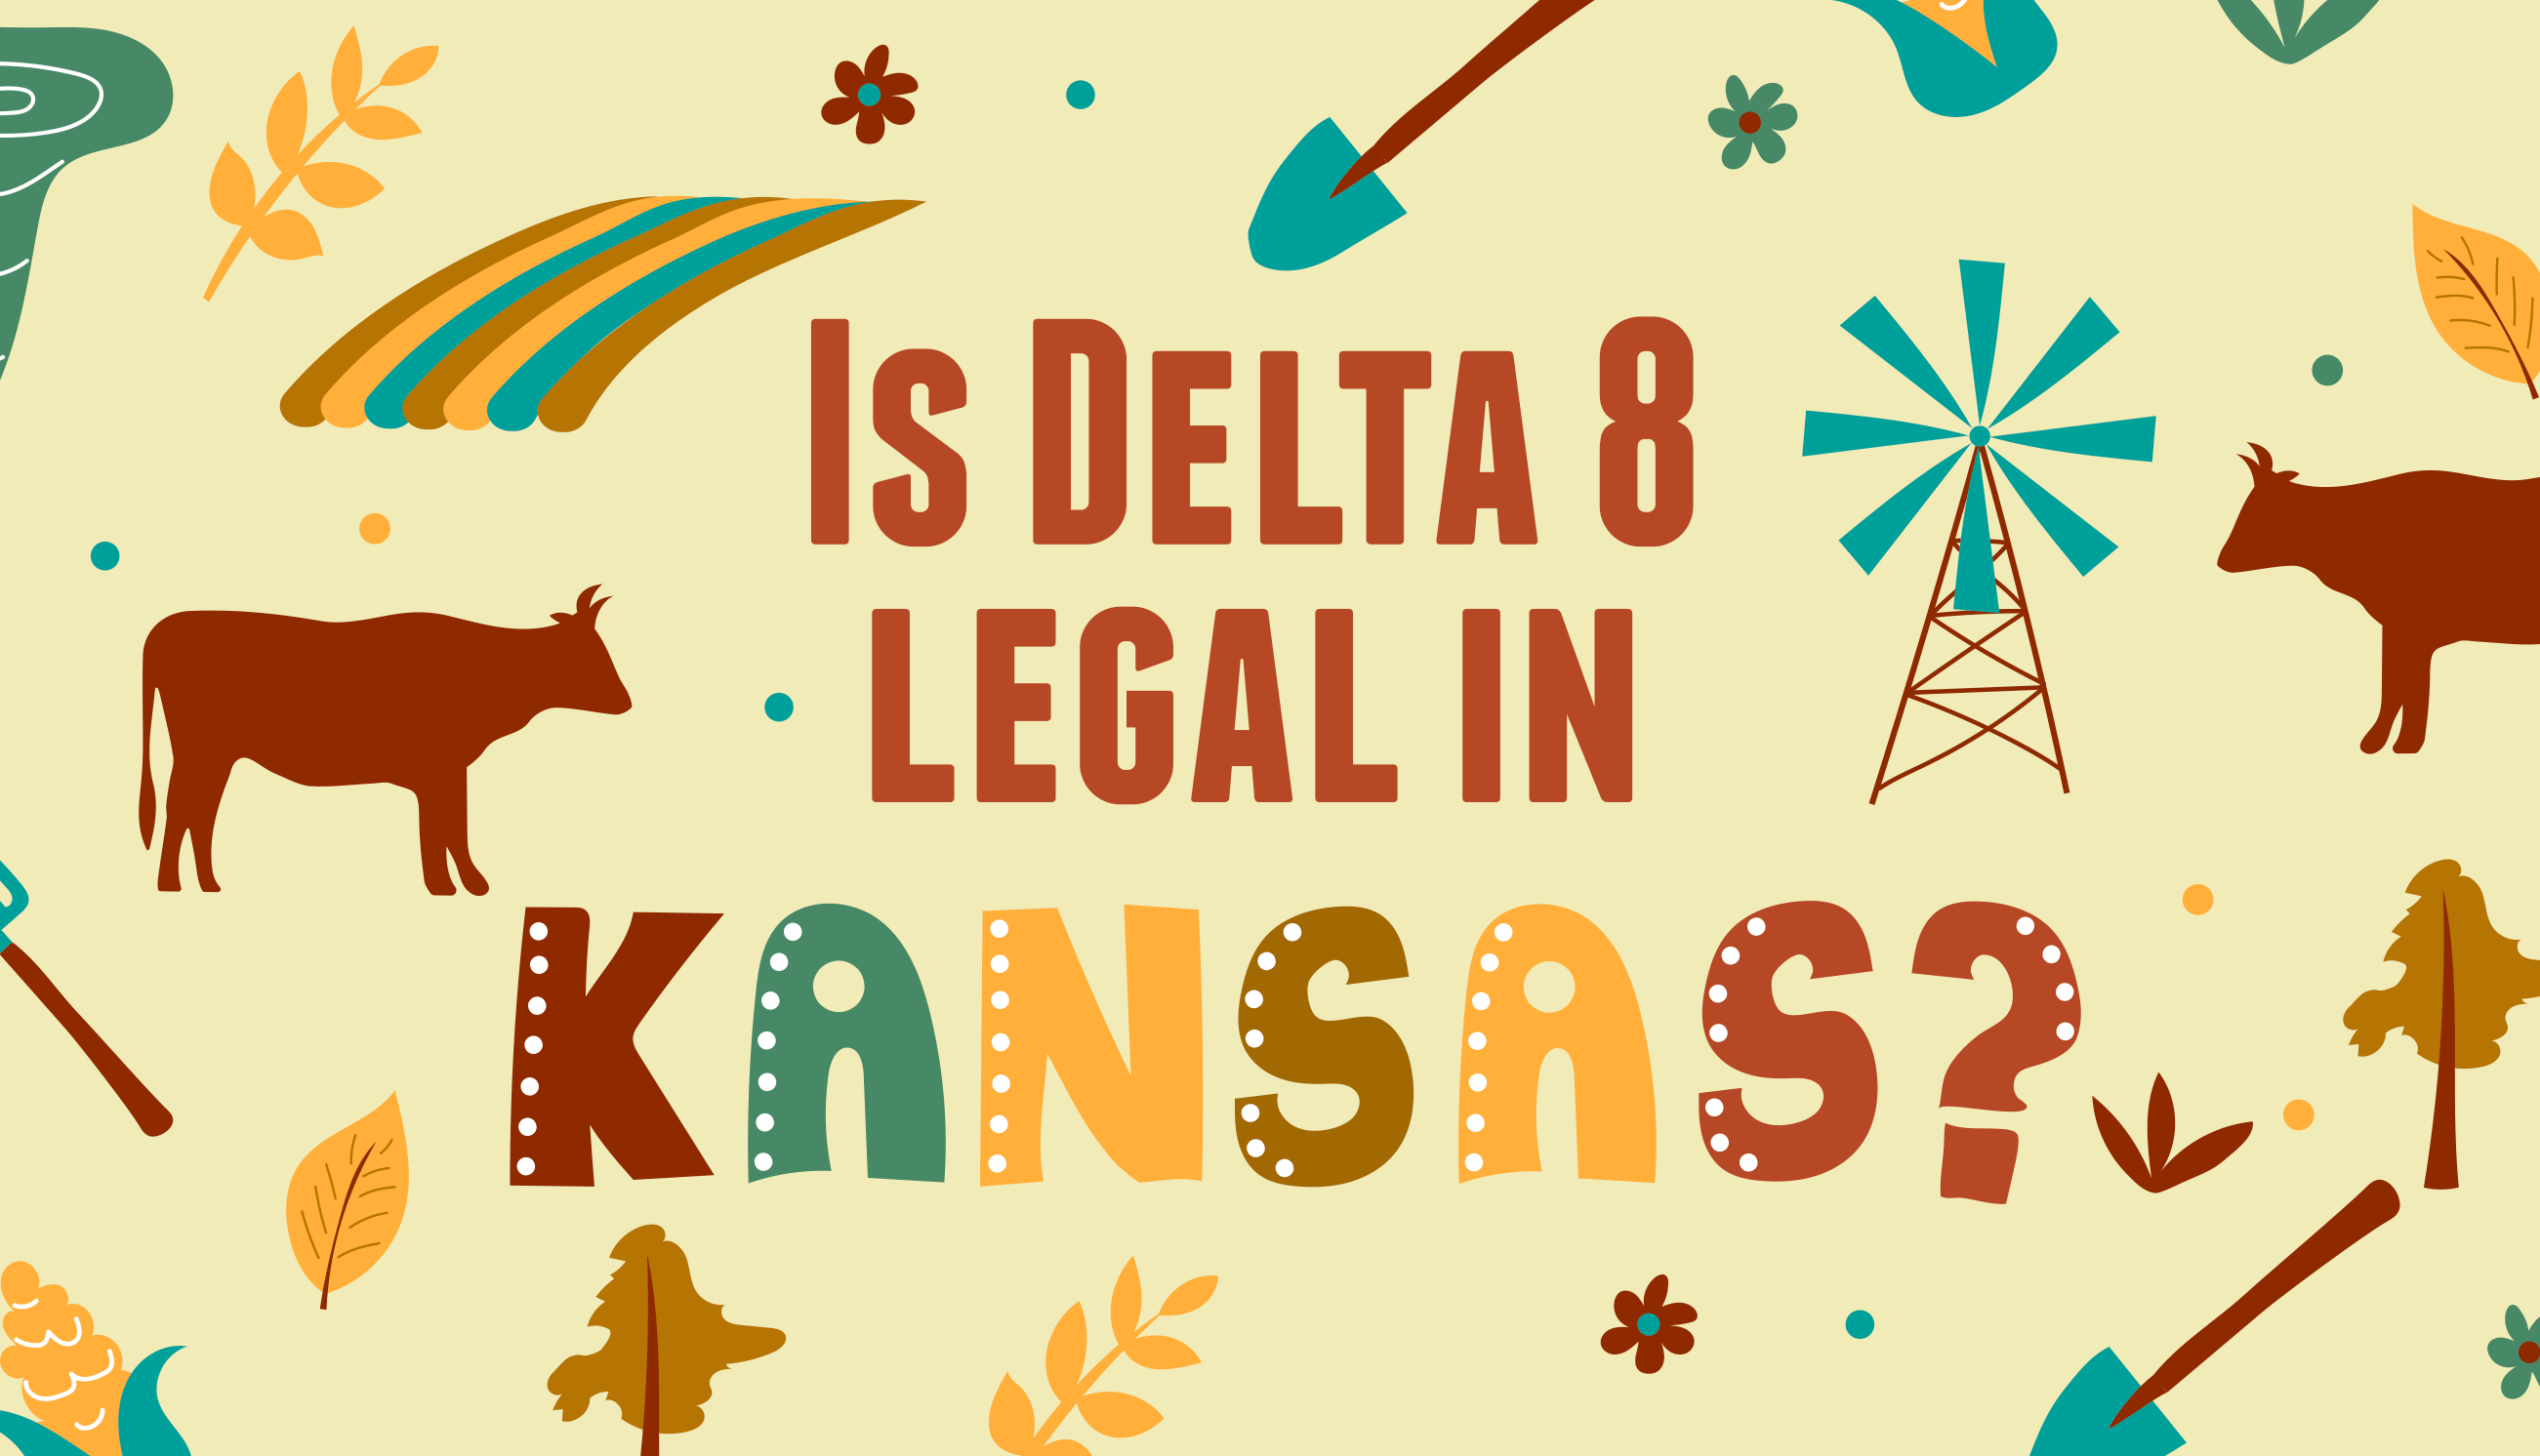 Is Delta 8 legal in Kansas?